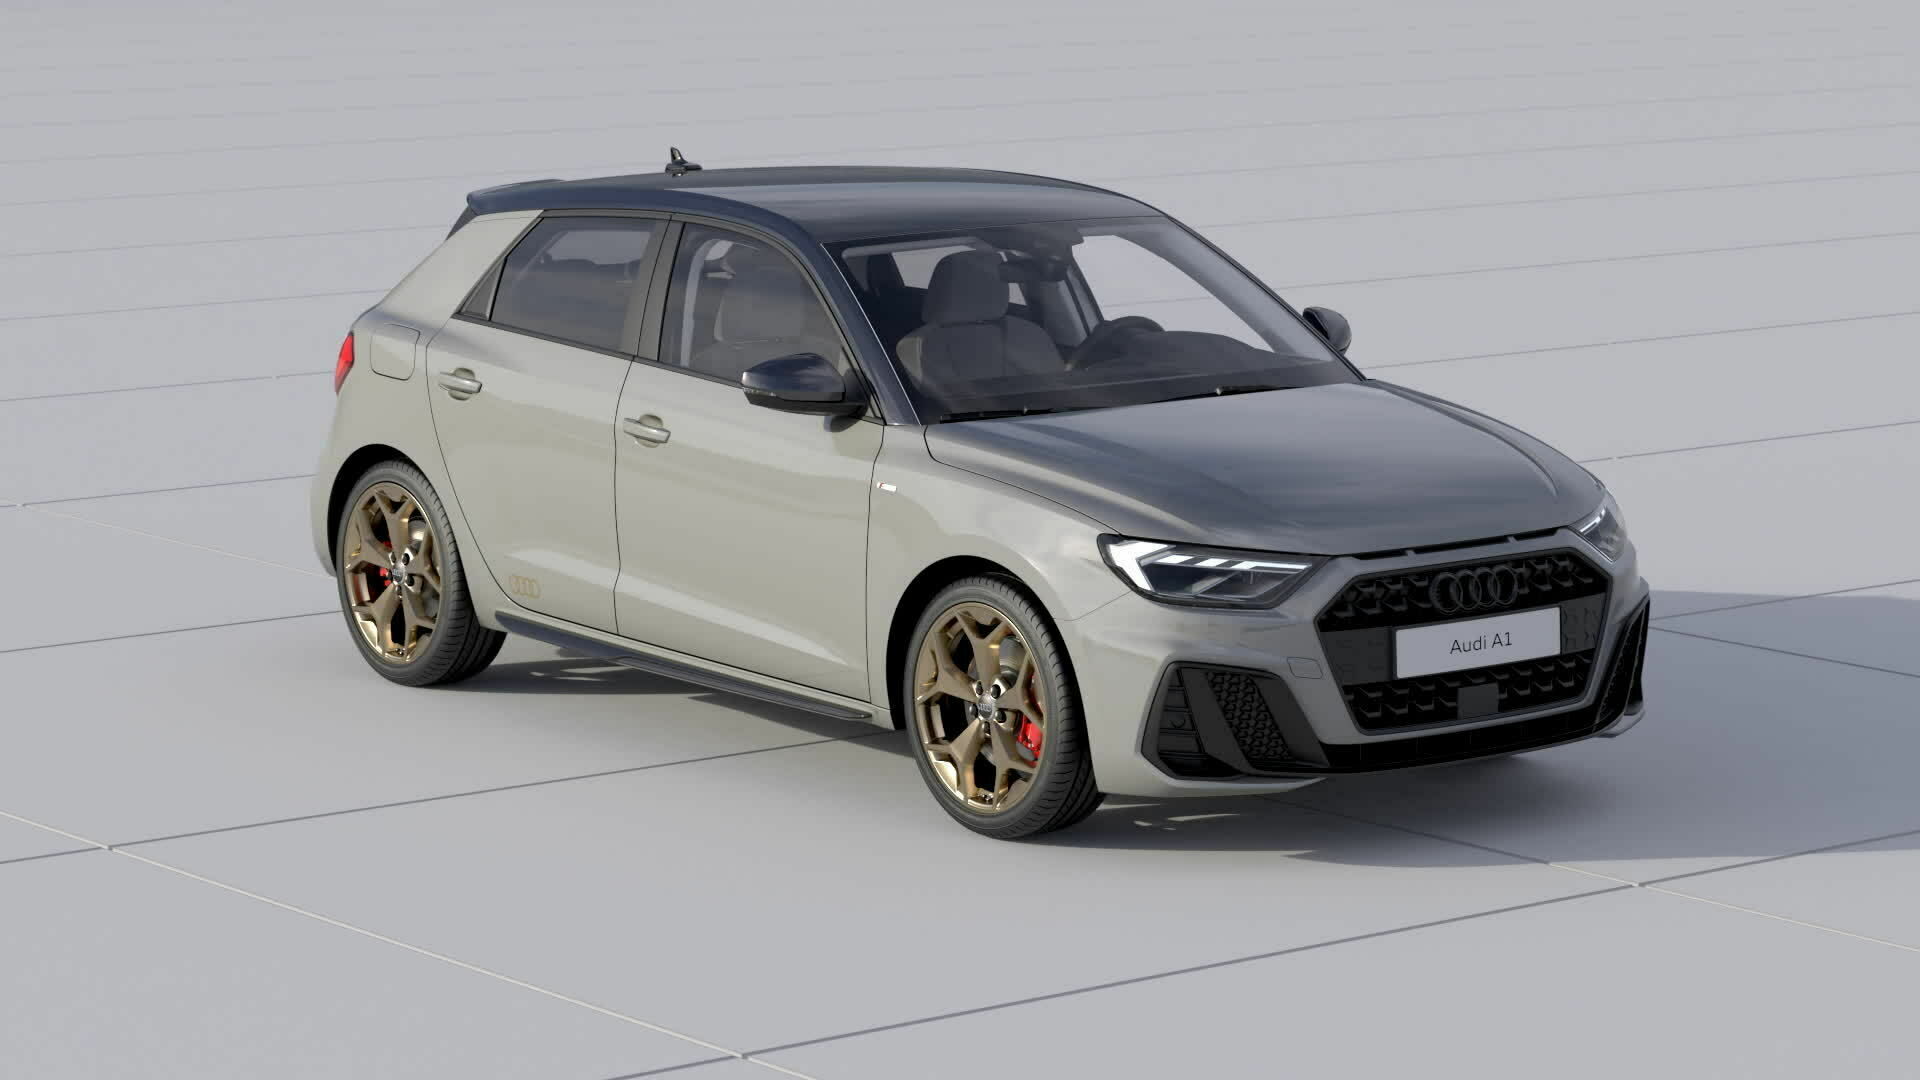 Audi A1 Sportback exterior design (Animation)